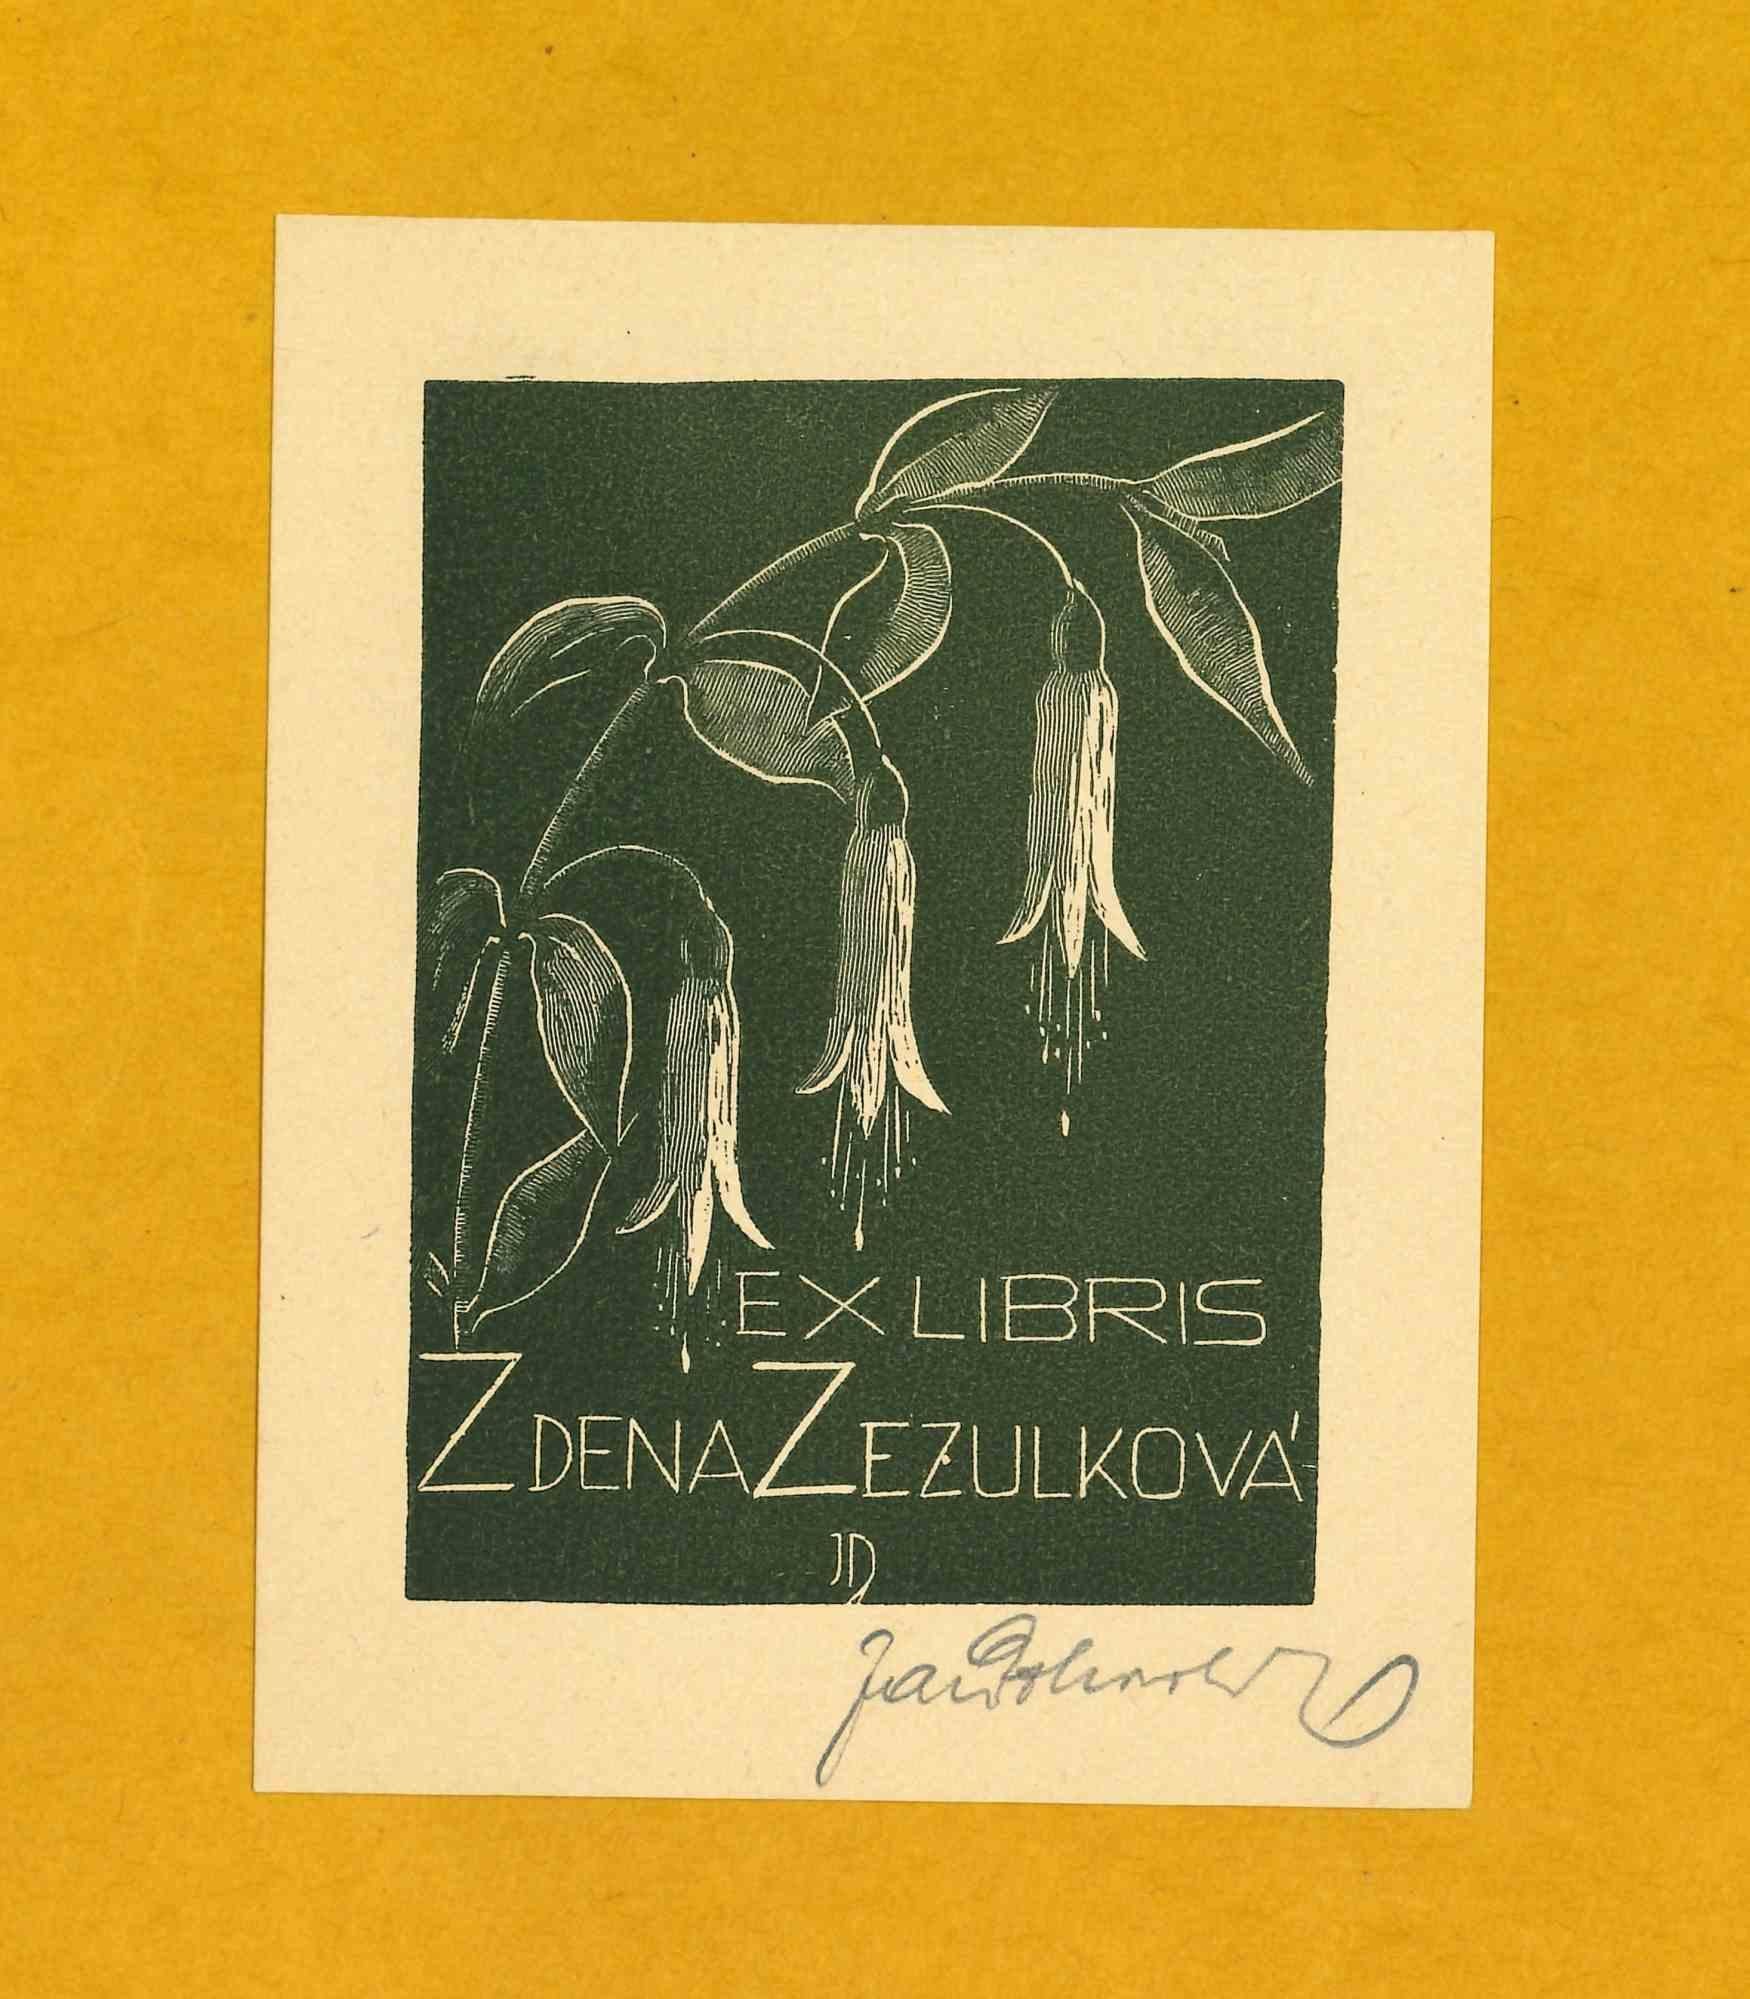 Unknown Landscape Print - Ex Libris Zdena Zezulkova - Original Woodcut - 1970s